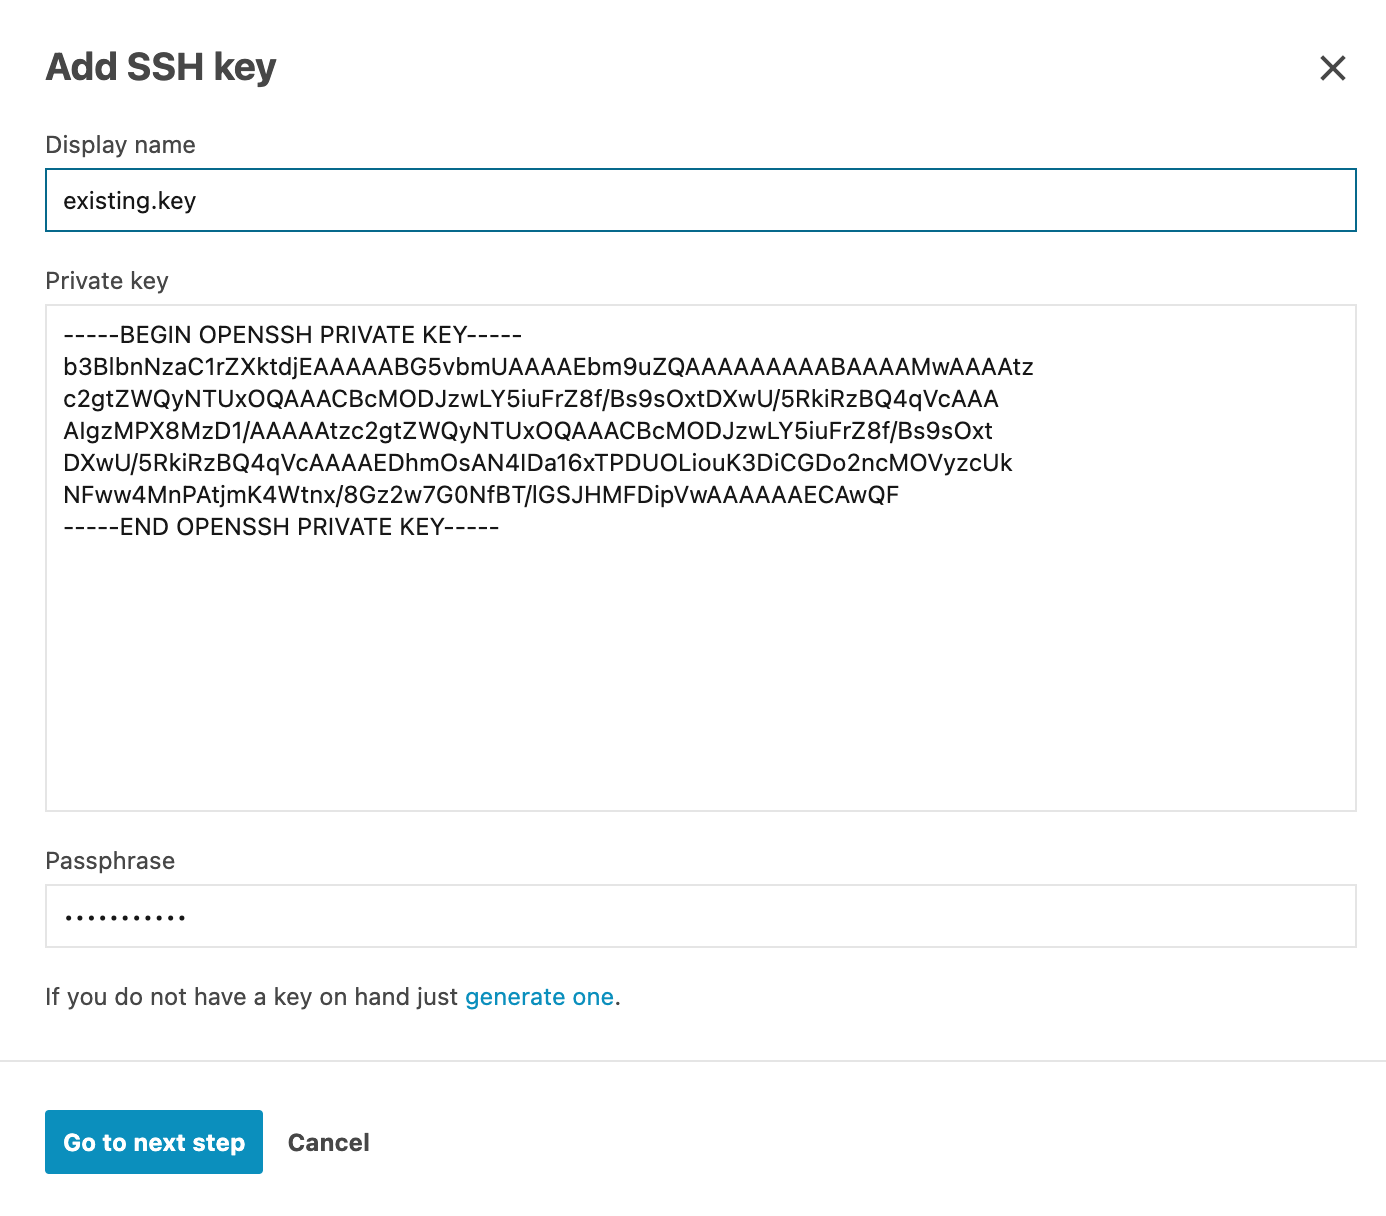 Adding an existing SSH key